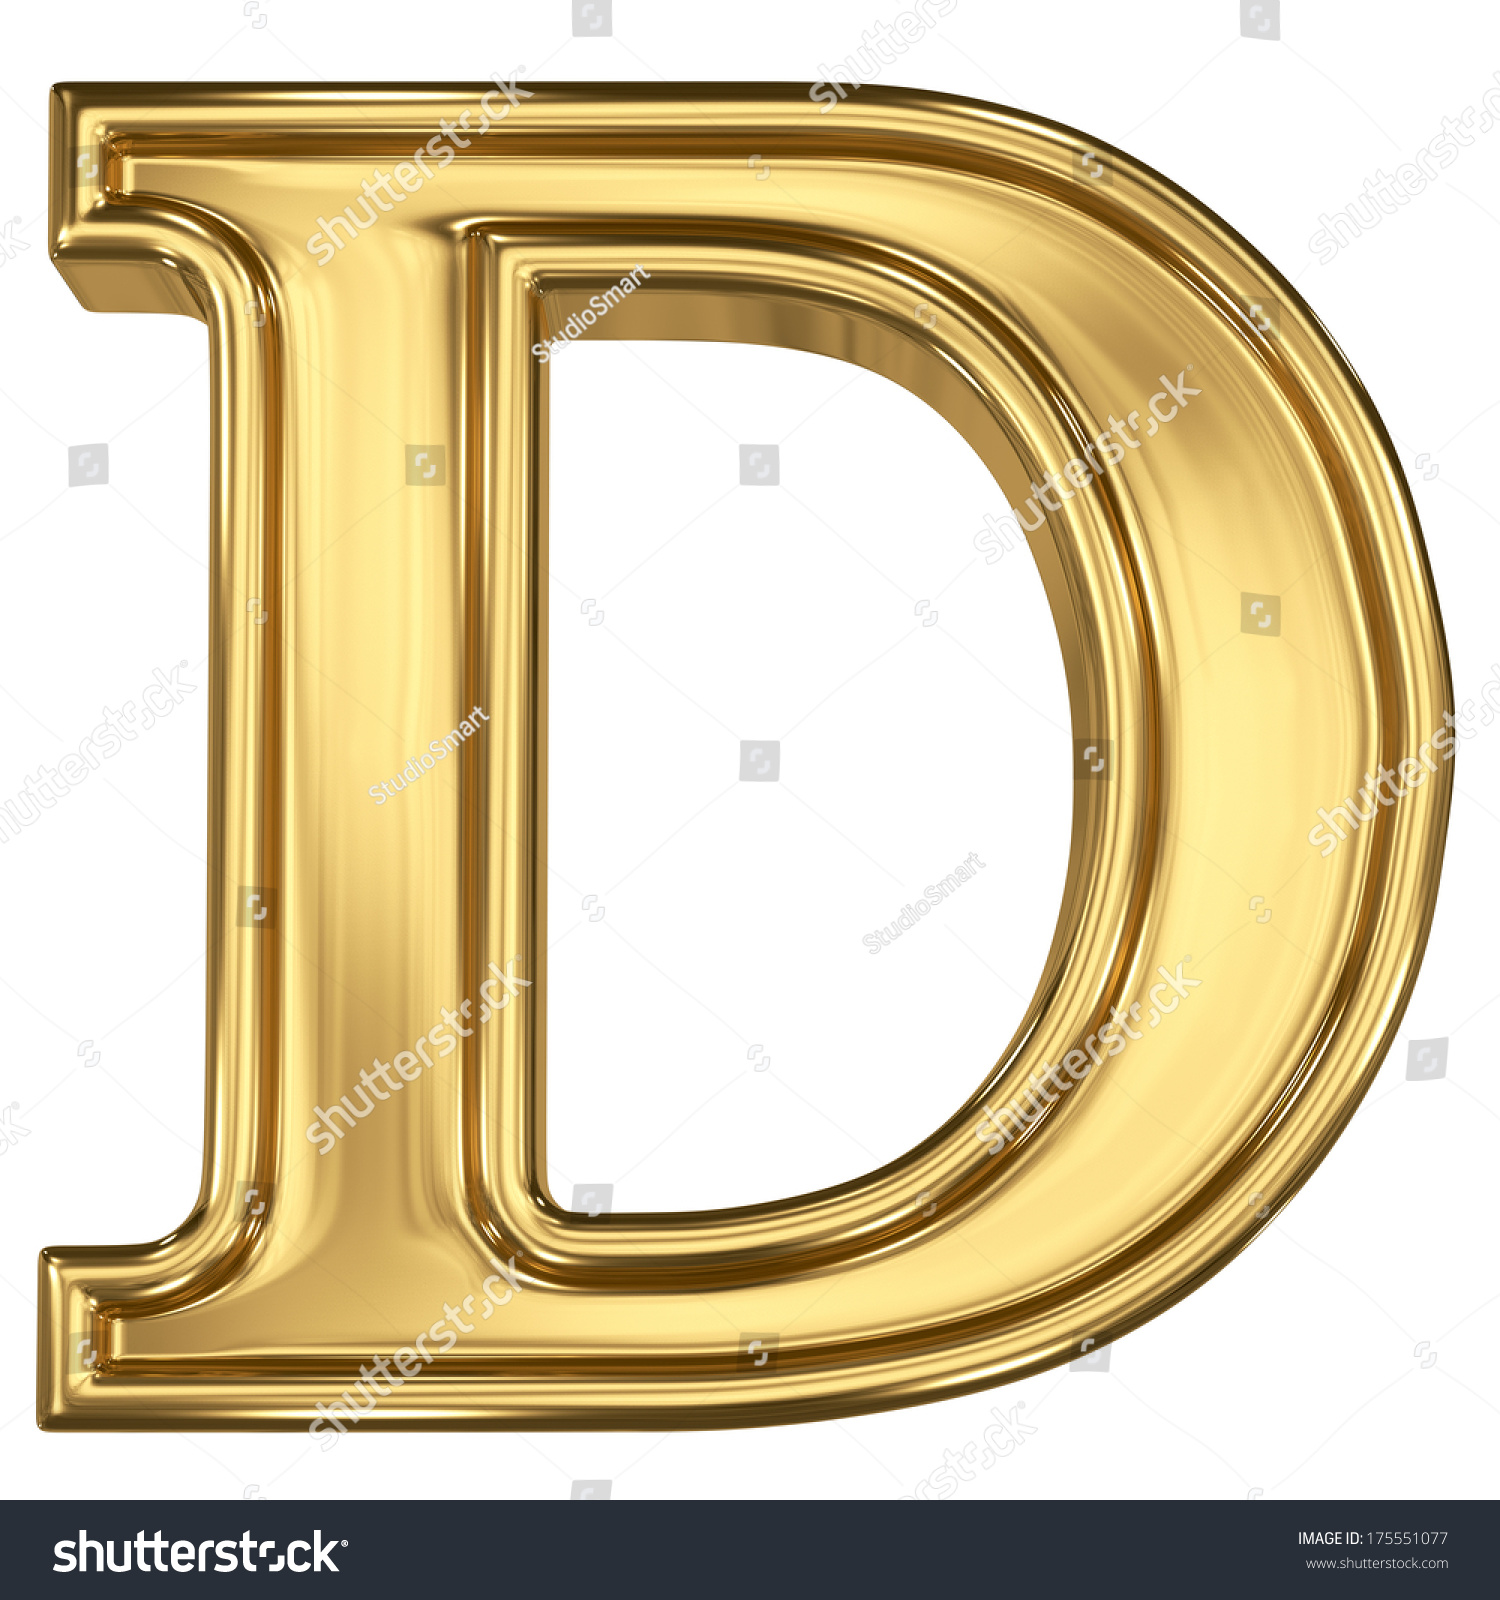 3d Brushed Golden Letter D Isolated Stock Illustration 175551077 ...